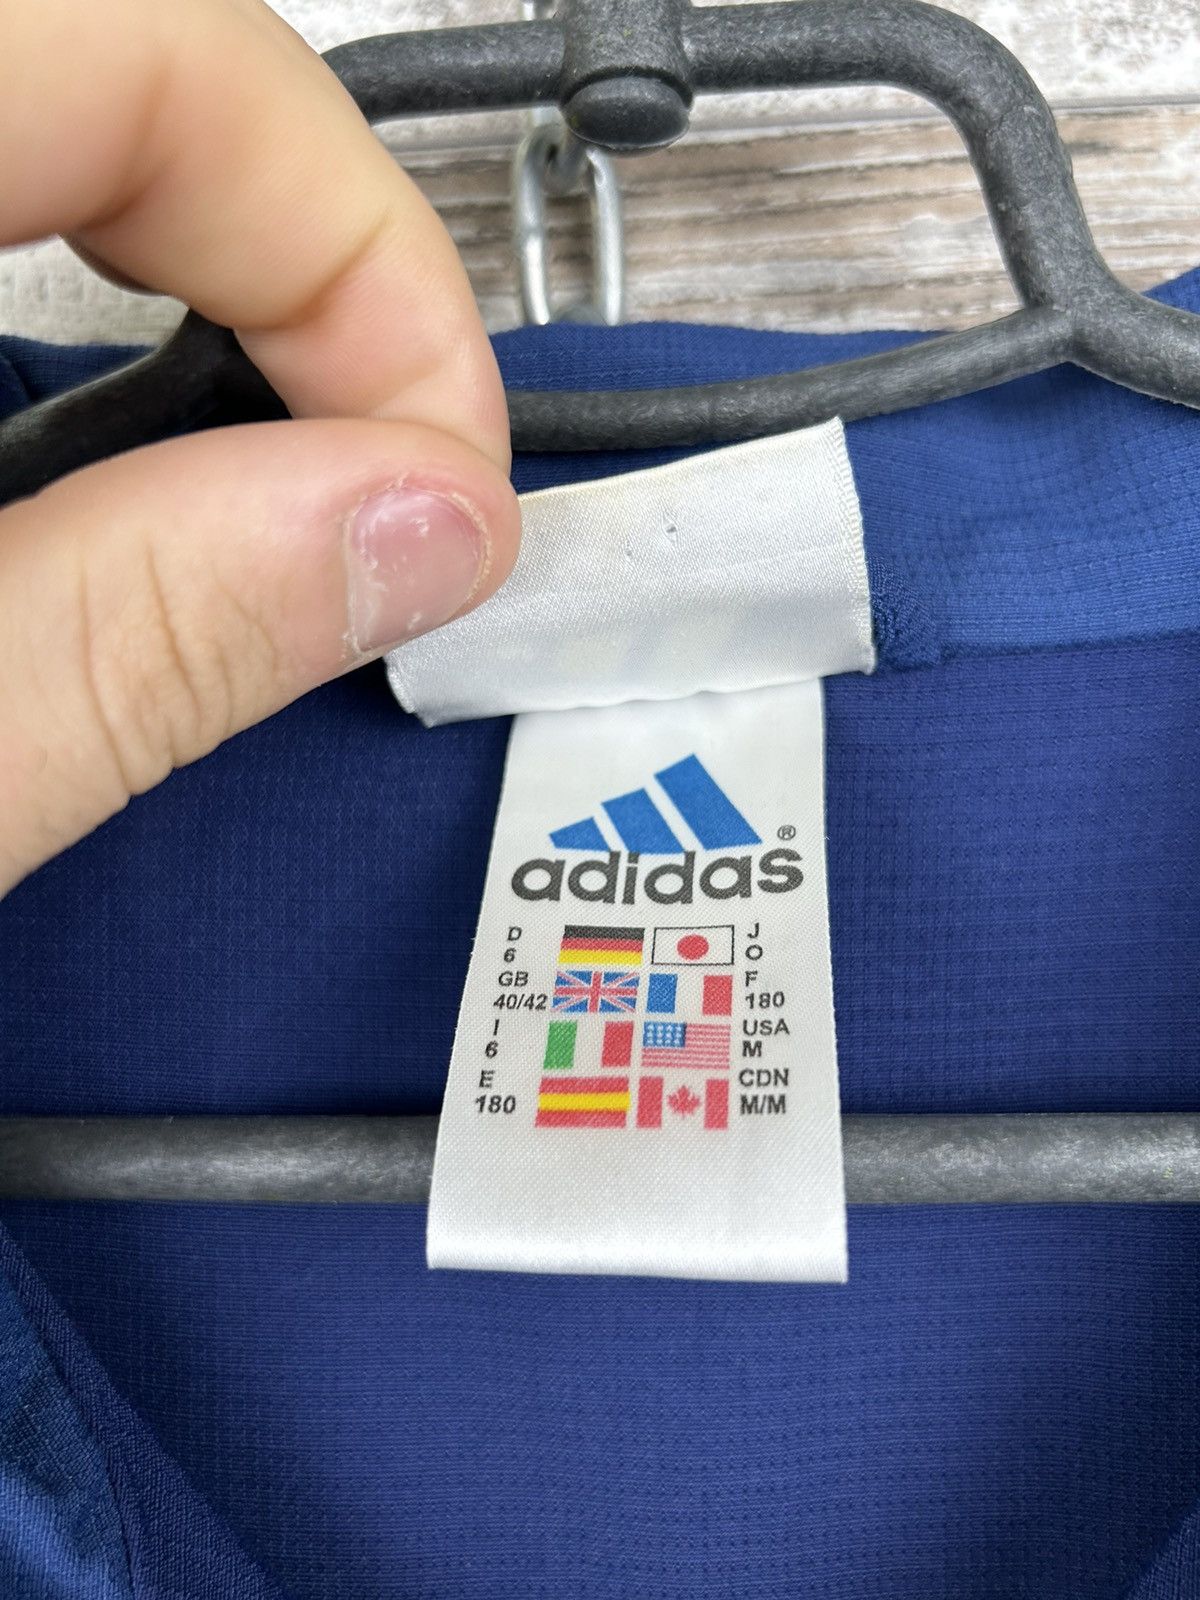 Adidas Mens Vintage Adidas Stripes Olympic track jacket y2k rare Size US M / EU 48-50 / 2 - 9 Thumbnail